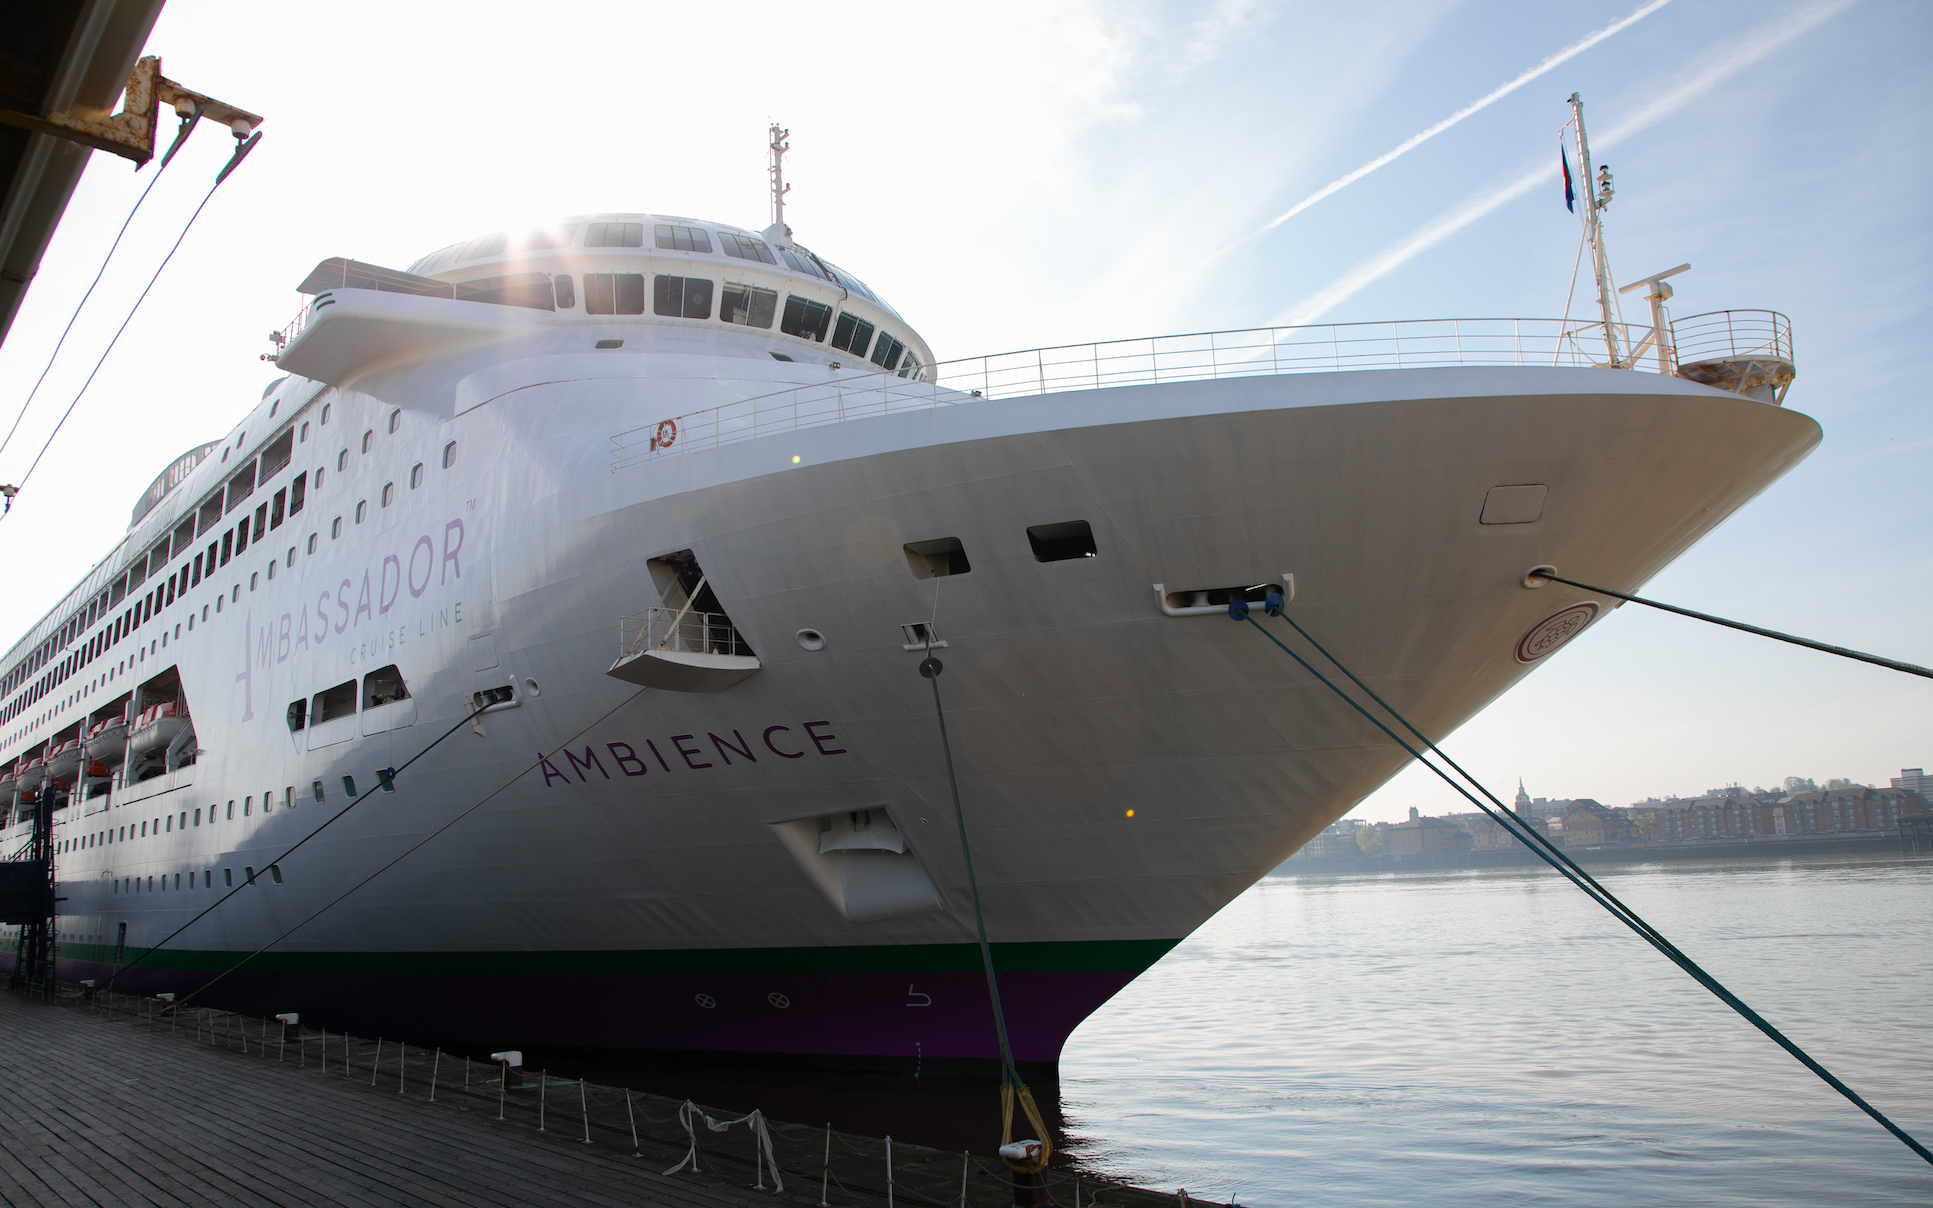 ambience cruise ship news